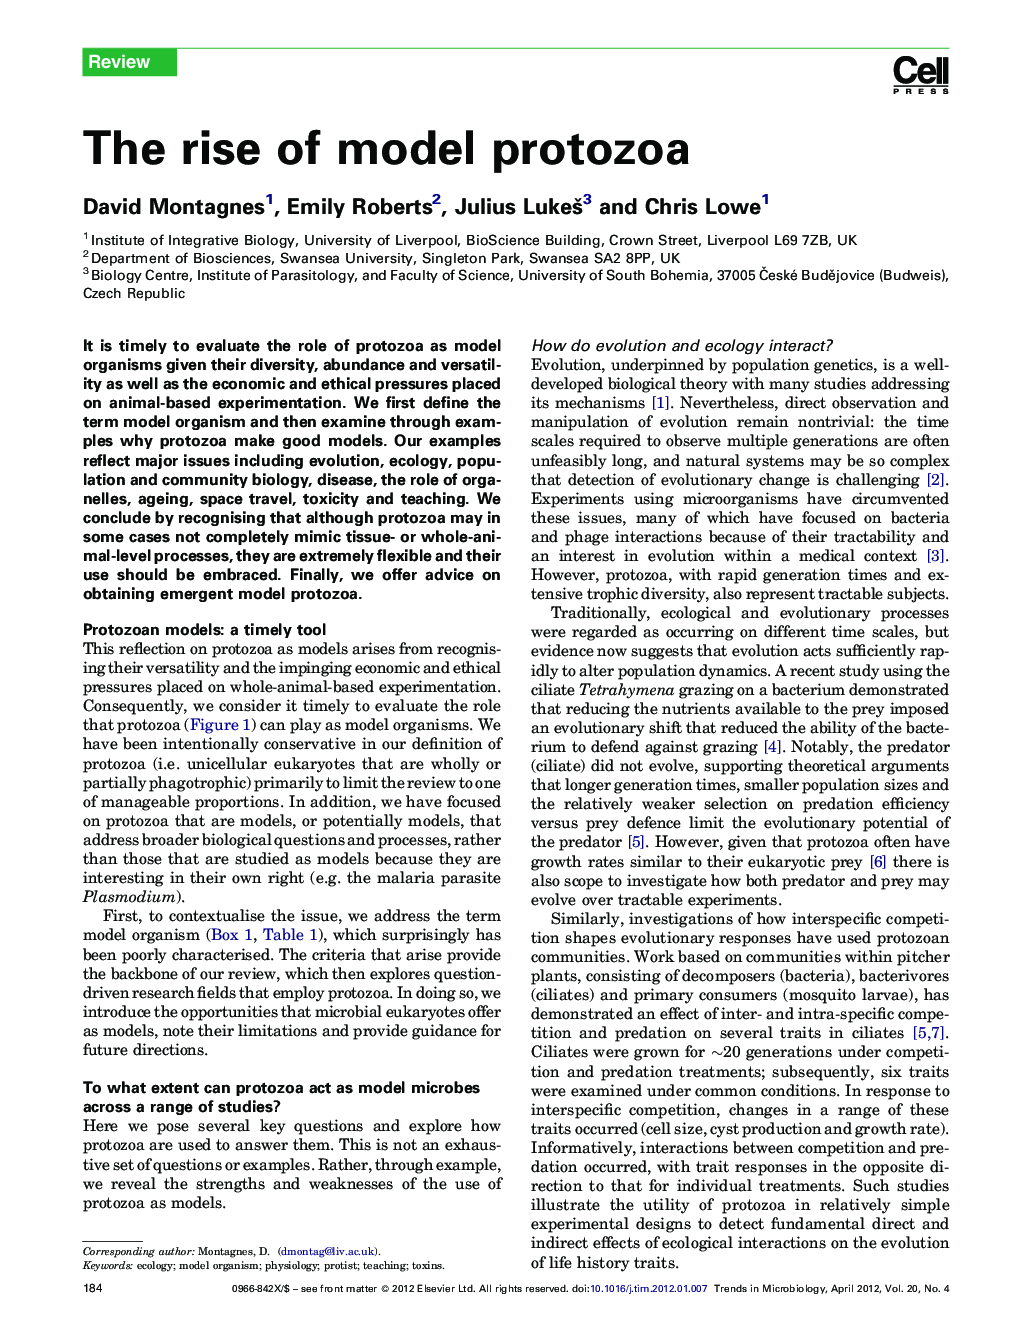 The rise of model protozoa